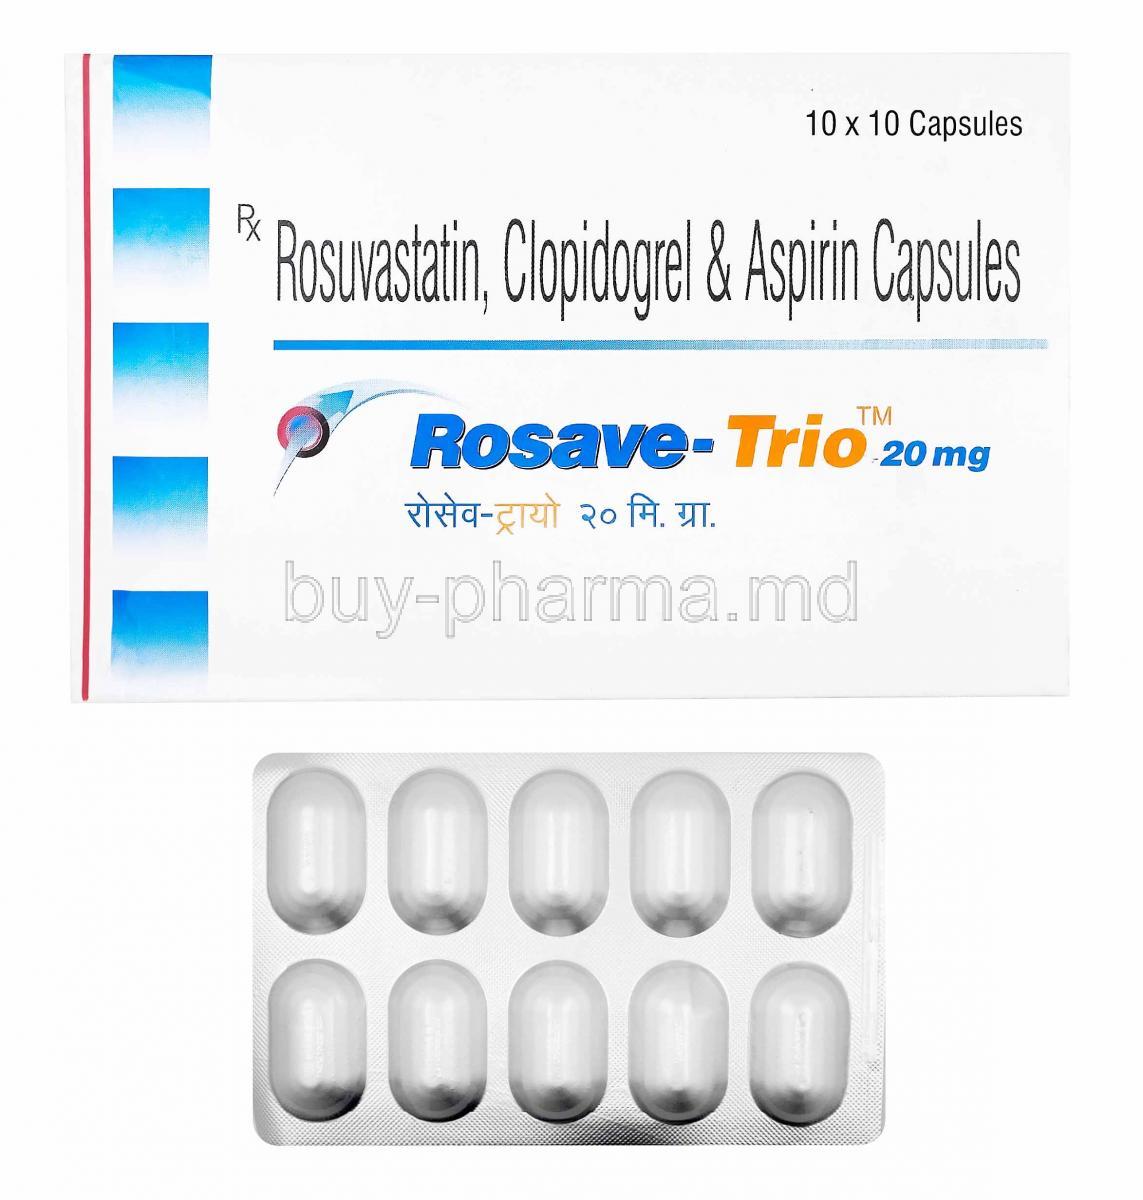 Rosave-Trio, Aspirin, Rosuvastatin and Clopidogrel 20mg box and tablets